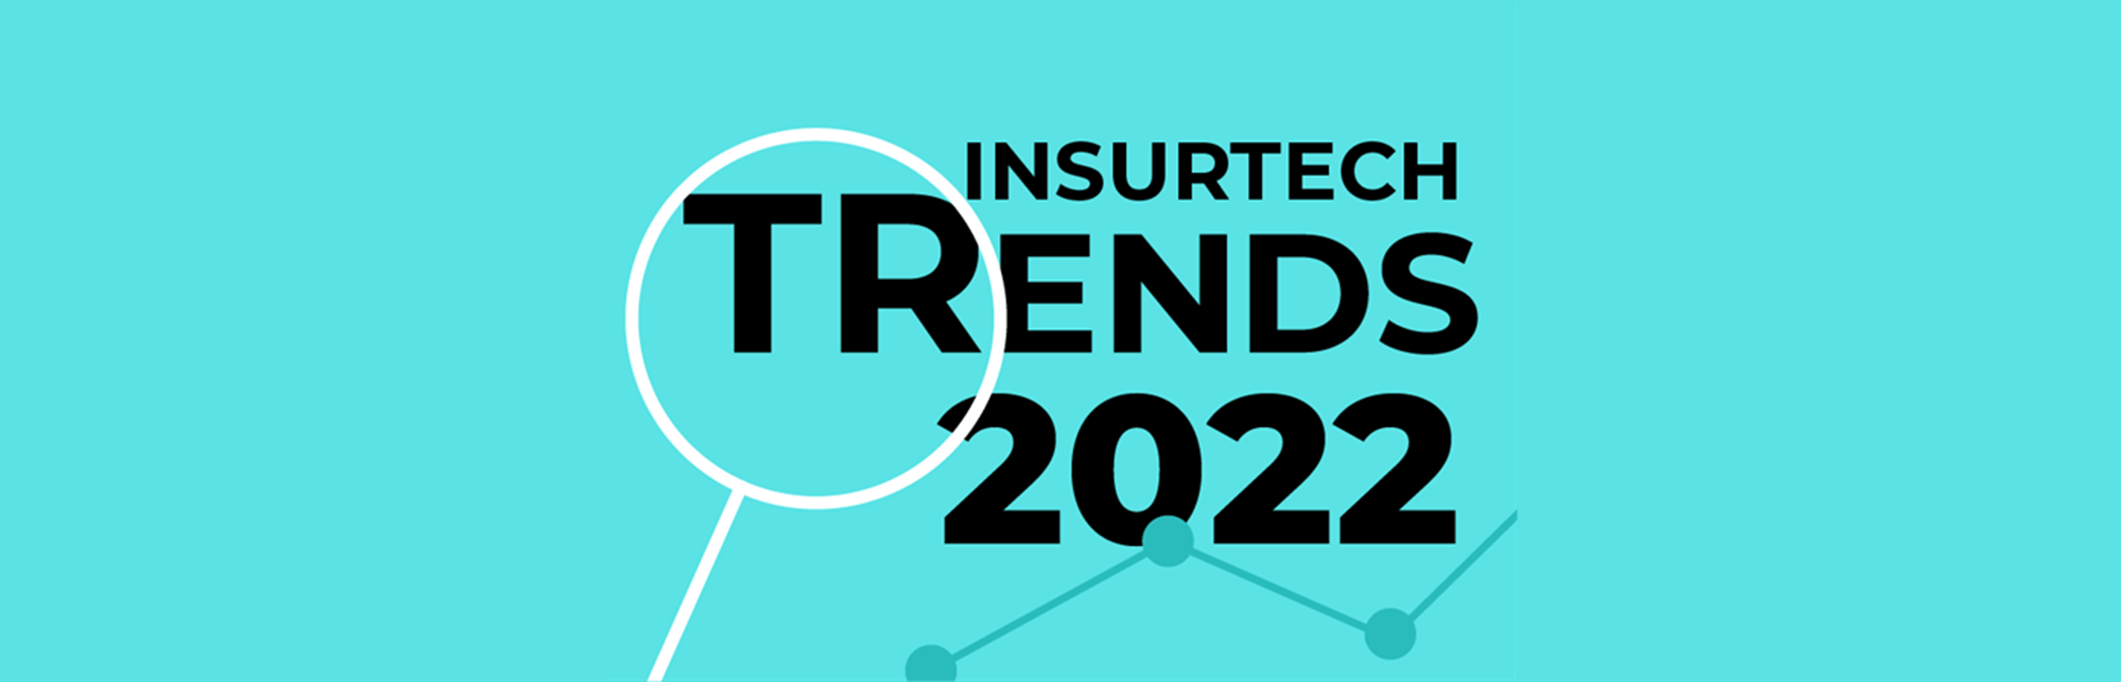 Top Insurtech Trends For 2022 - Hero Image